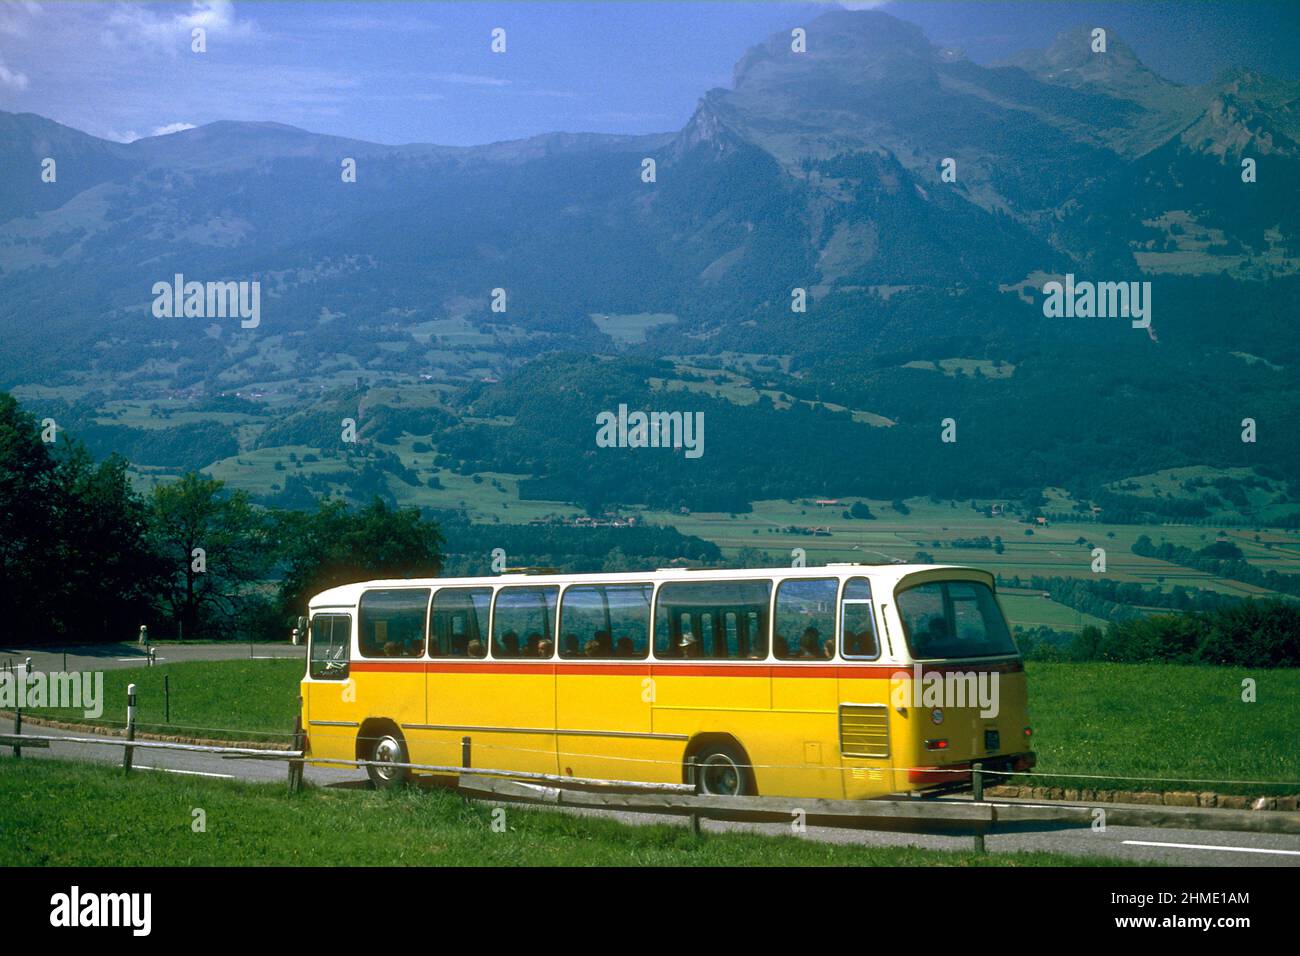 Bus on rural road with the Alps in the background in 1981, Triesenberg, Liechtenstein Stock Photo